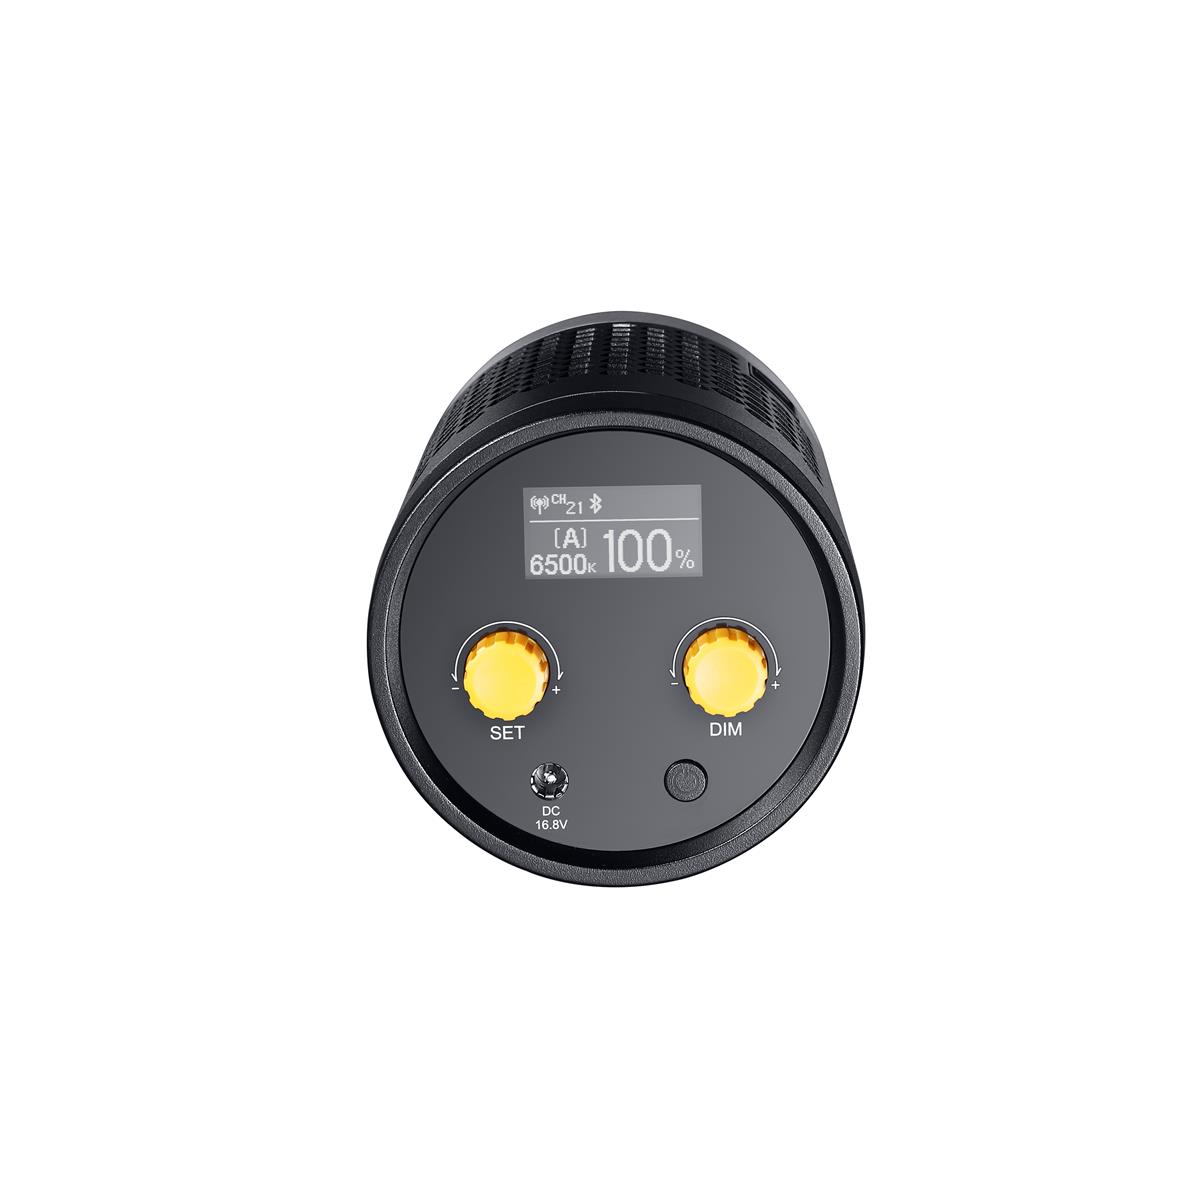 Godox ML60BI LED Light (Bi Color)